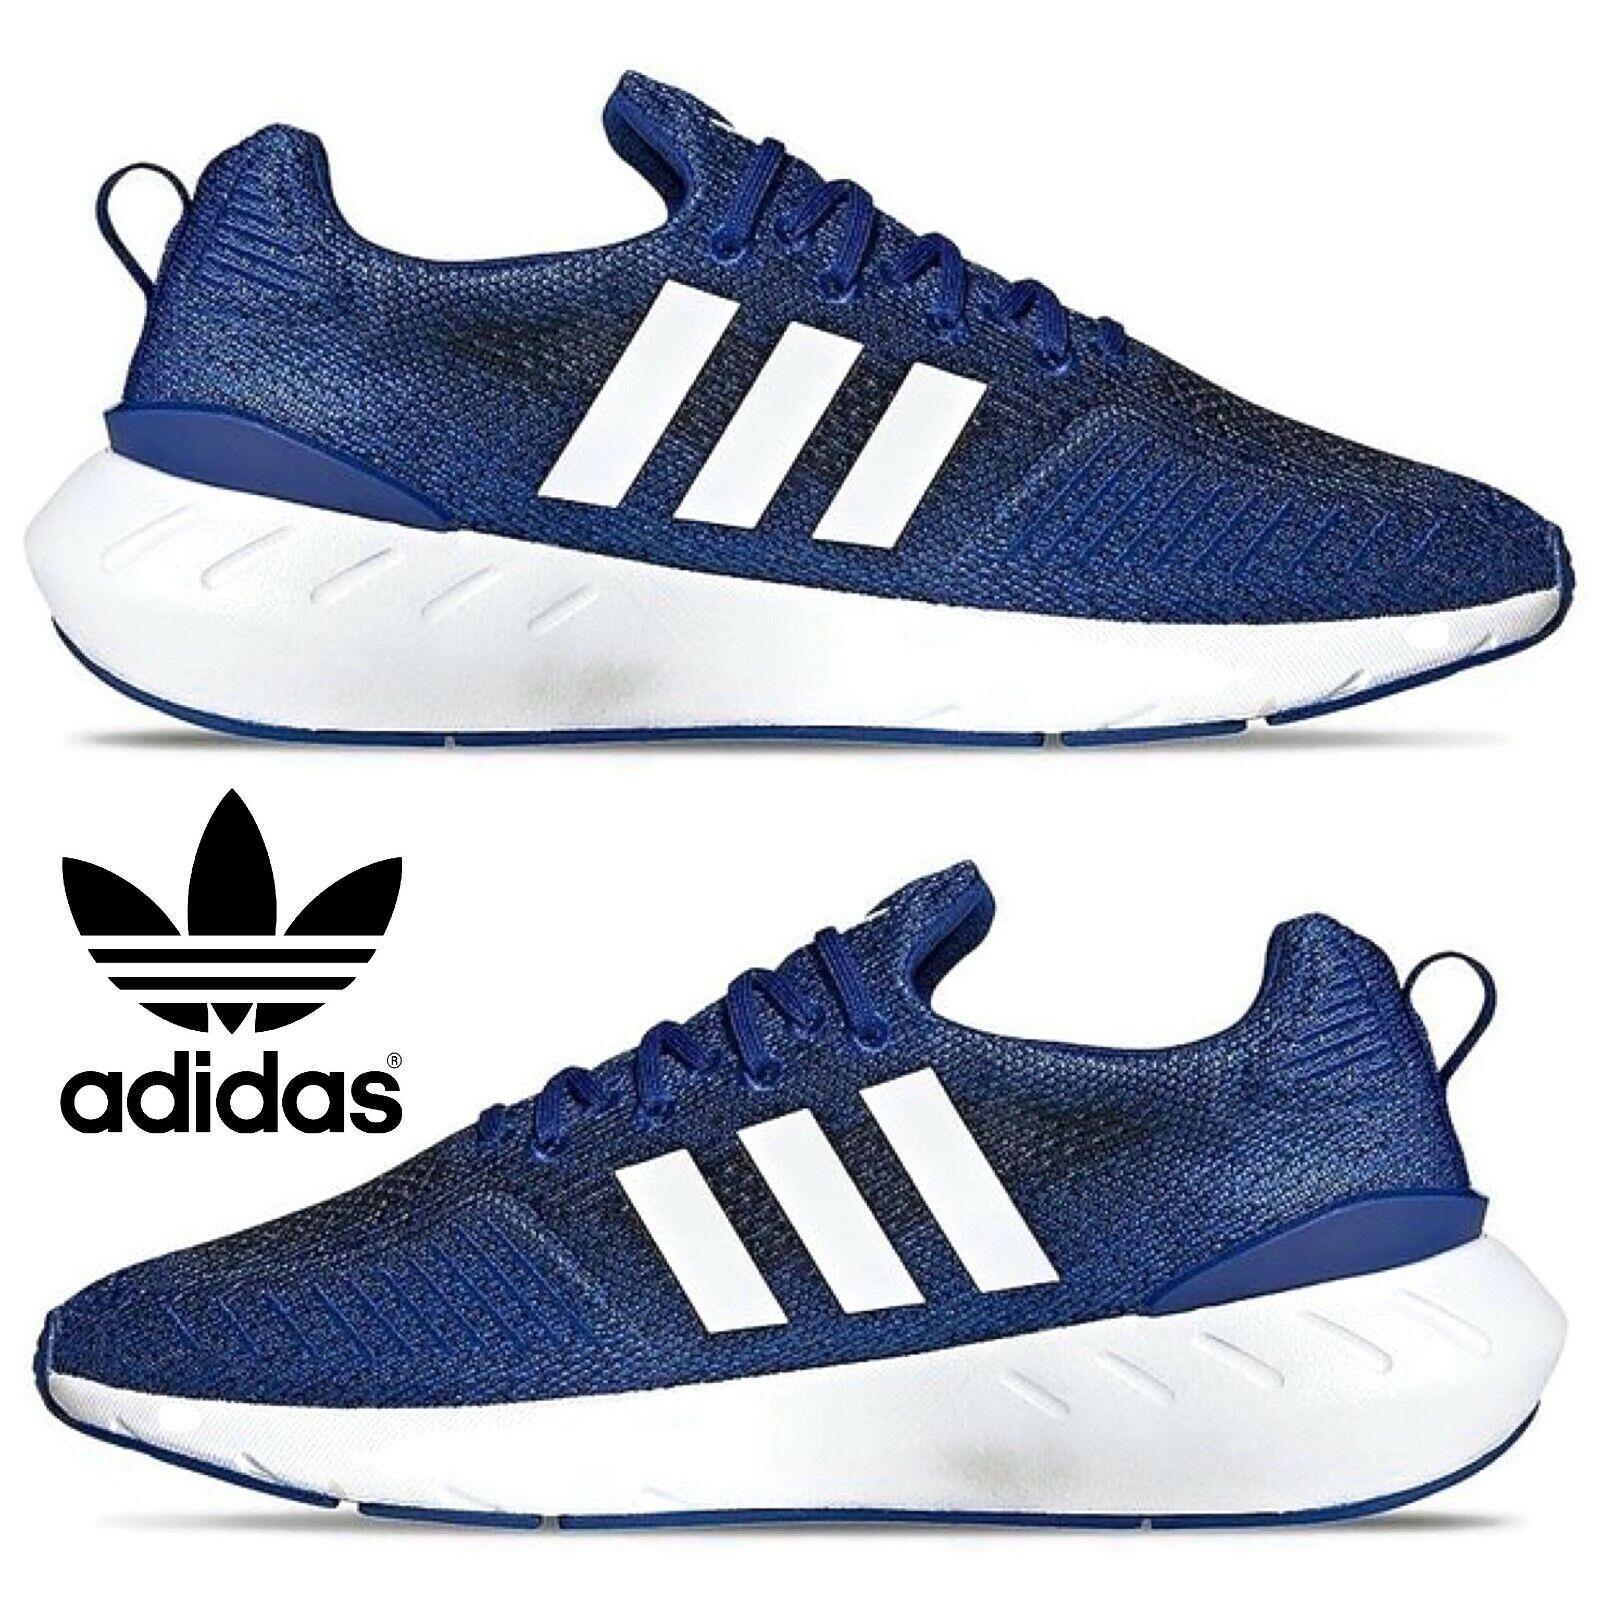 Adidas Originals Swift Run 22 Men`s Sneakers Comfort Casual Shoes Blue White - Blue , Team Royal Blue/Footwear White/Legend Ink Manufacturer